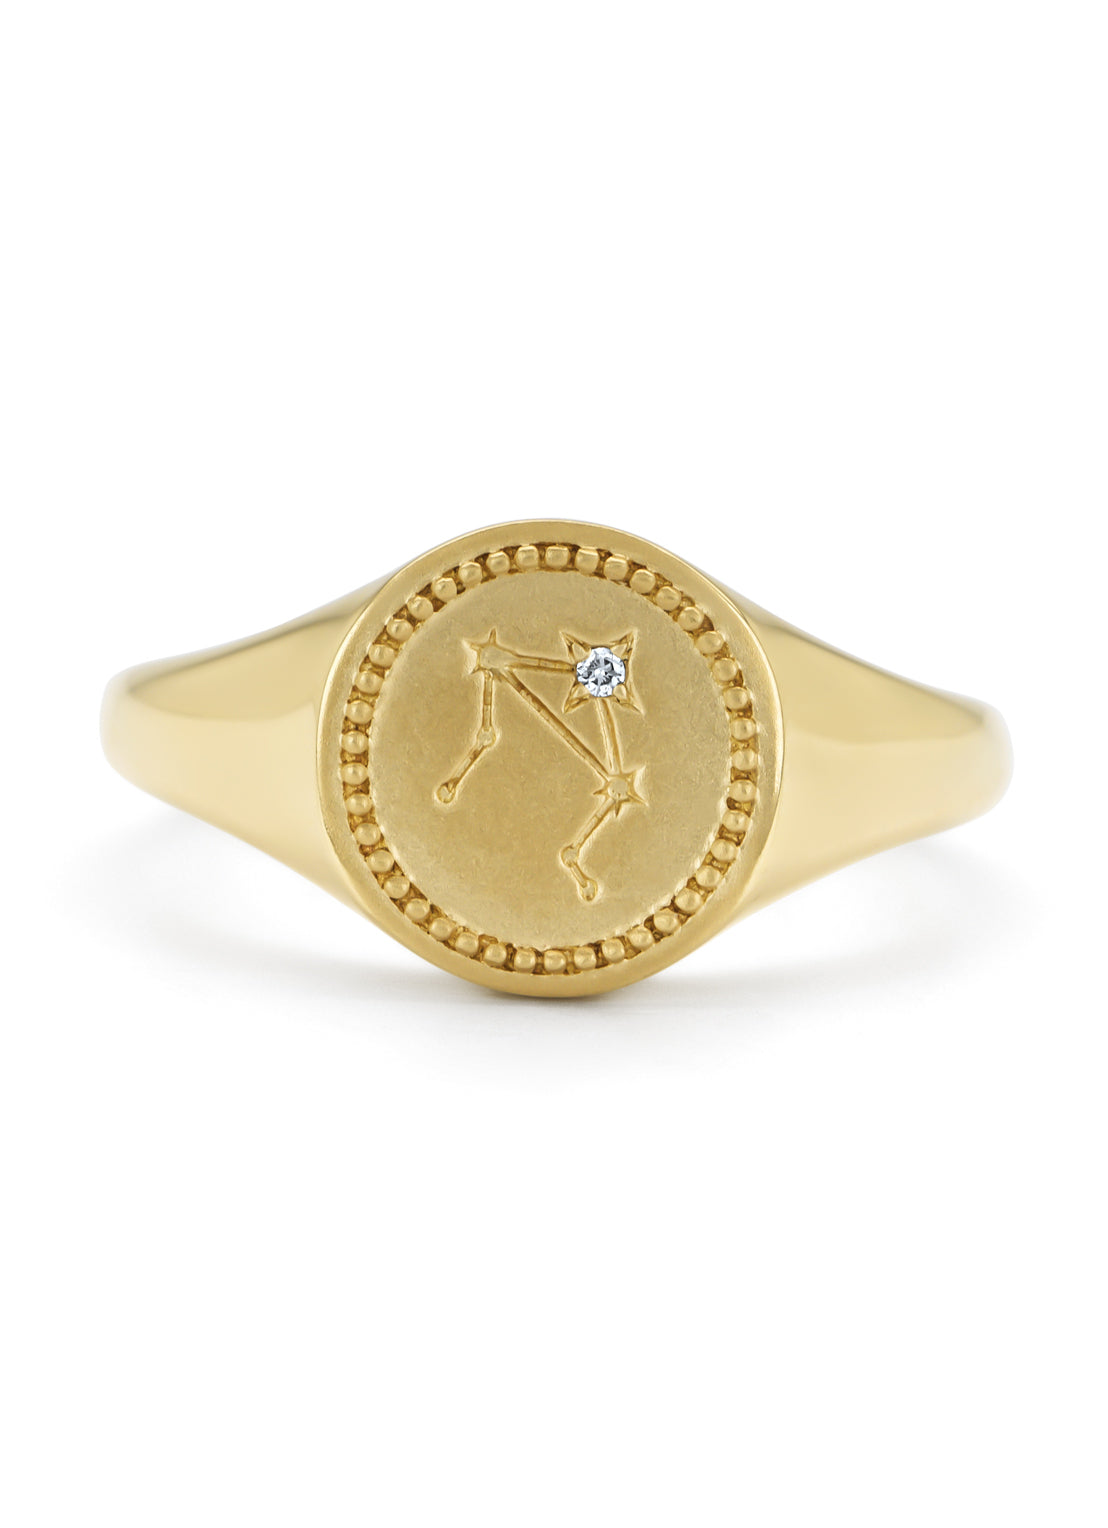 Yellow gold signet ring, zodiac-libra (scales)